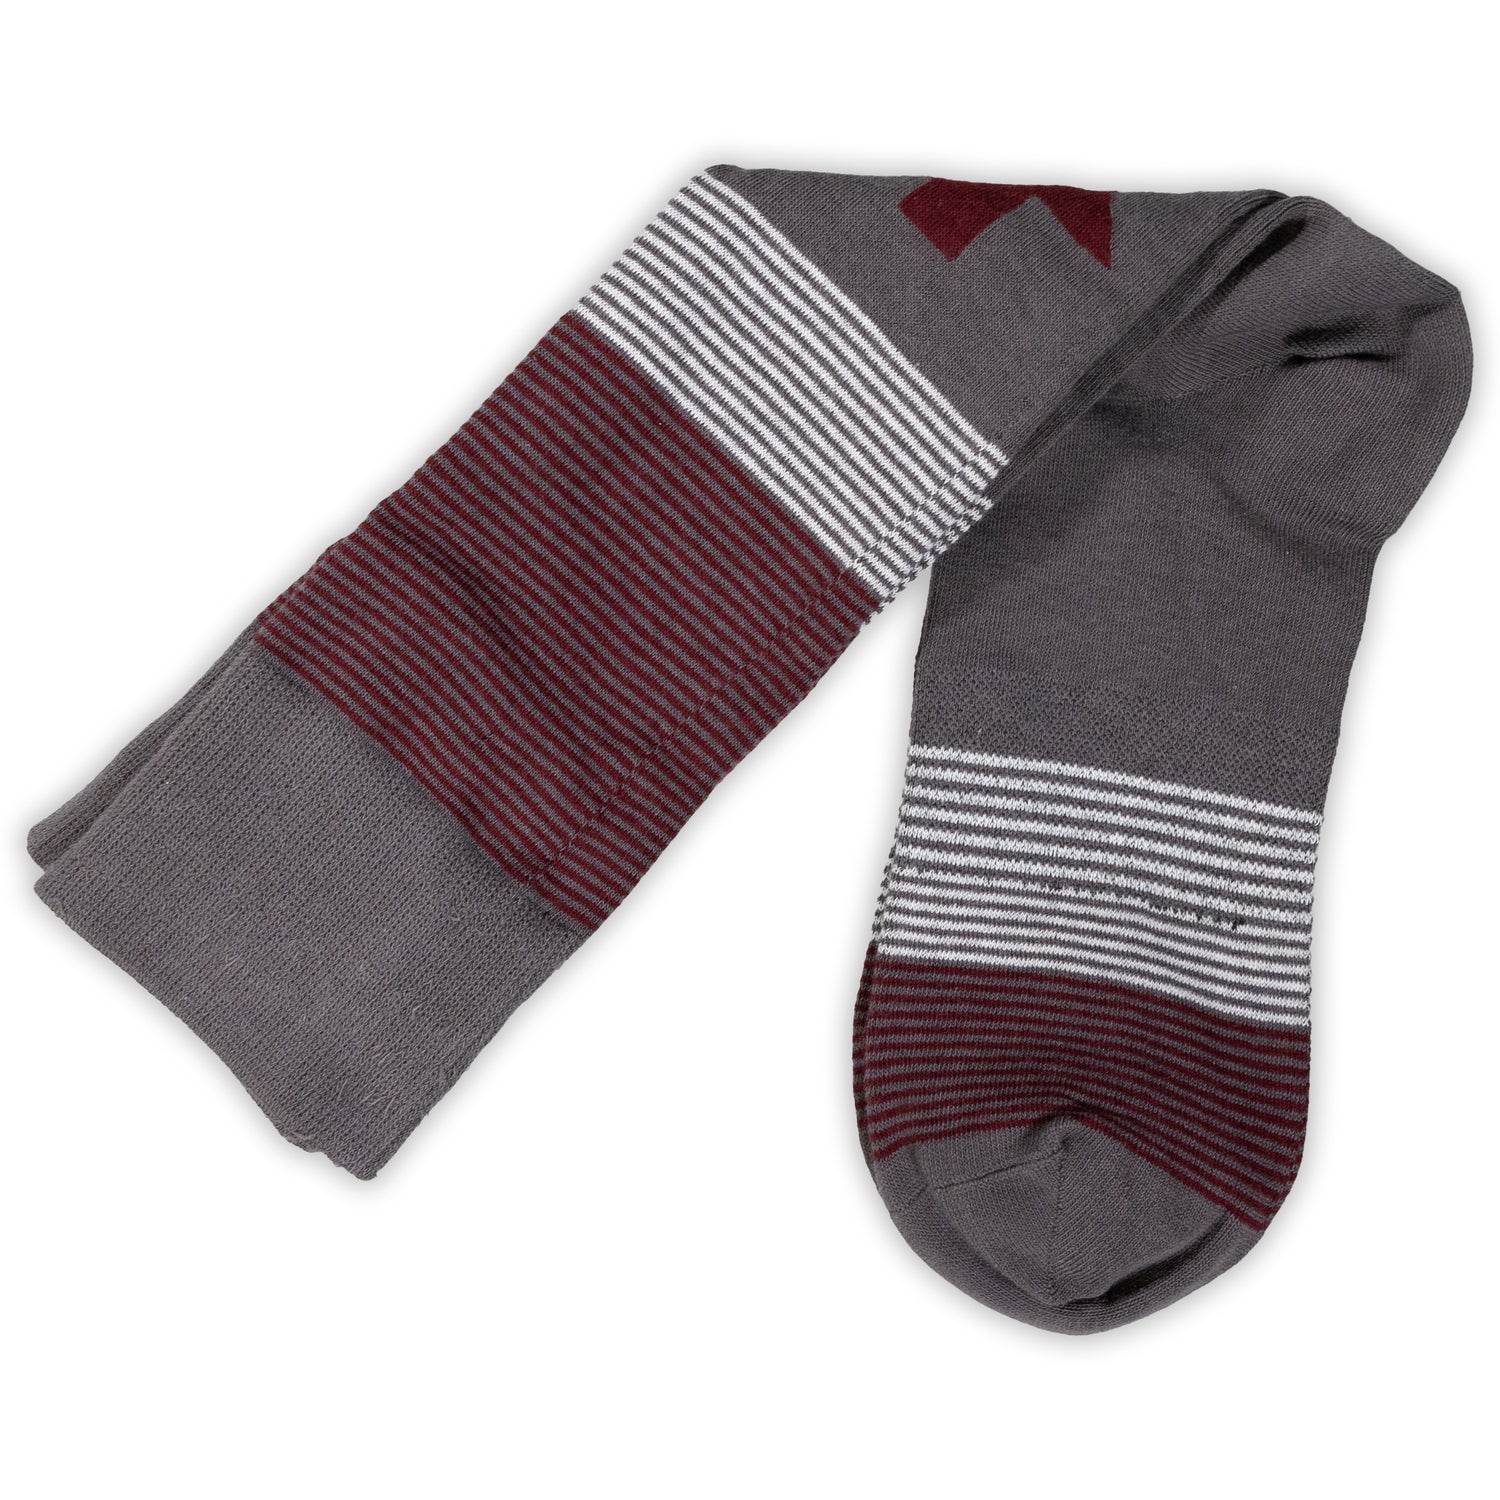 Maroon and Gray Texas and Stripe Socks